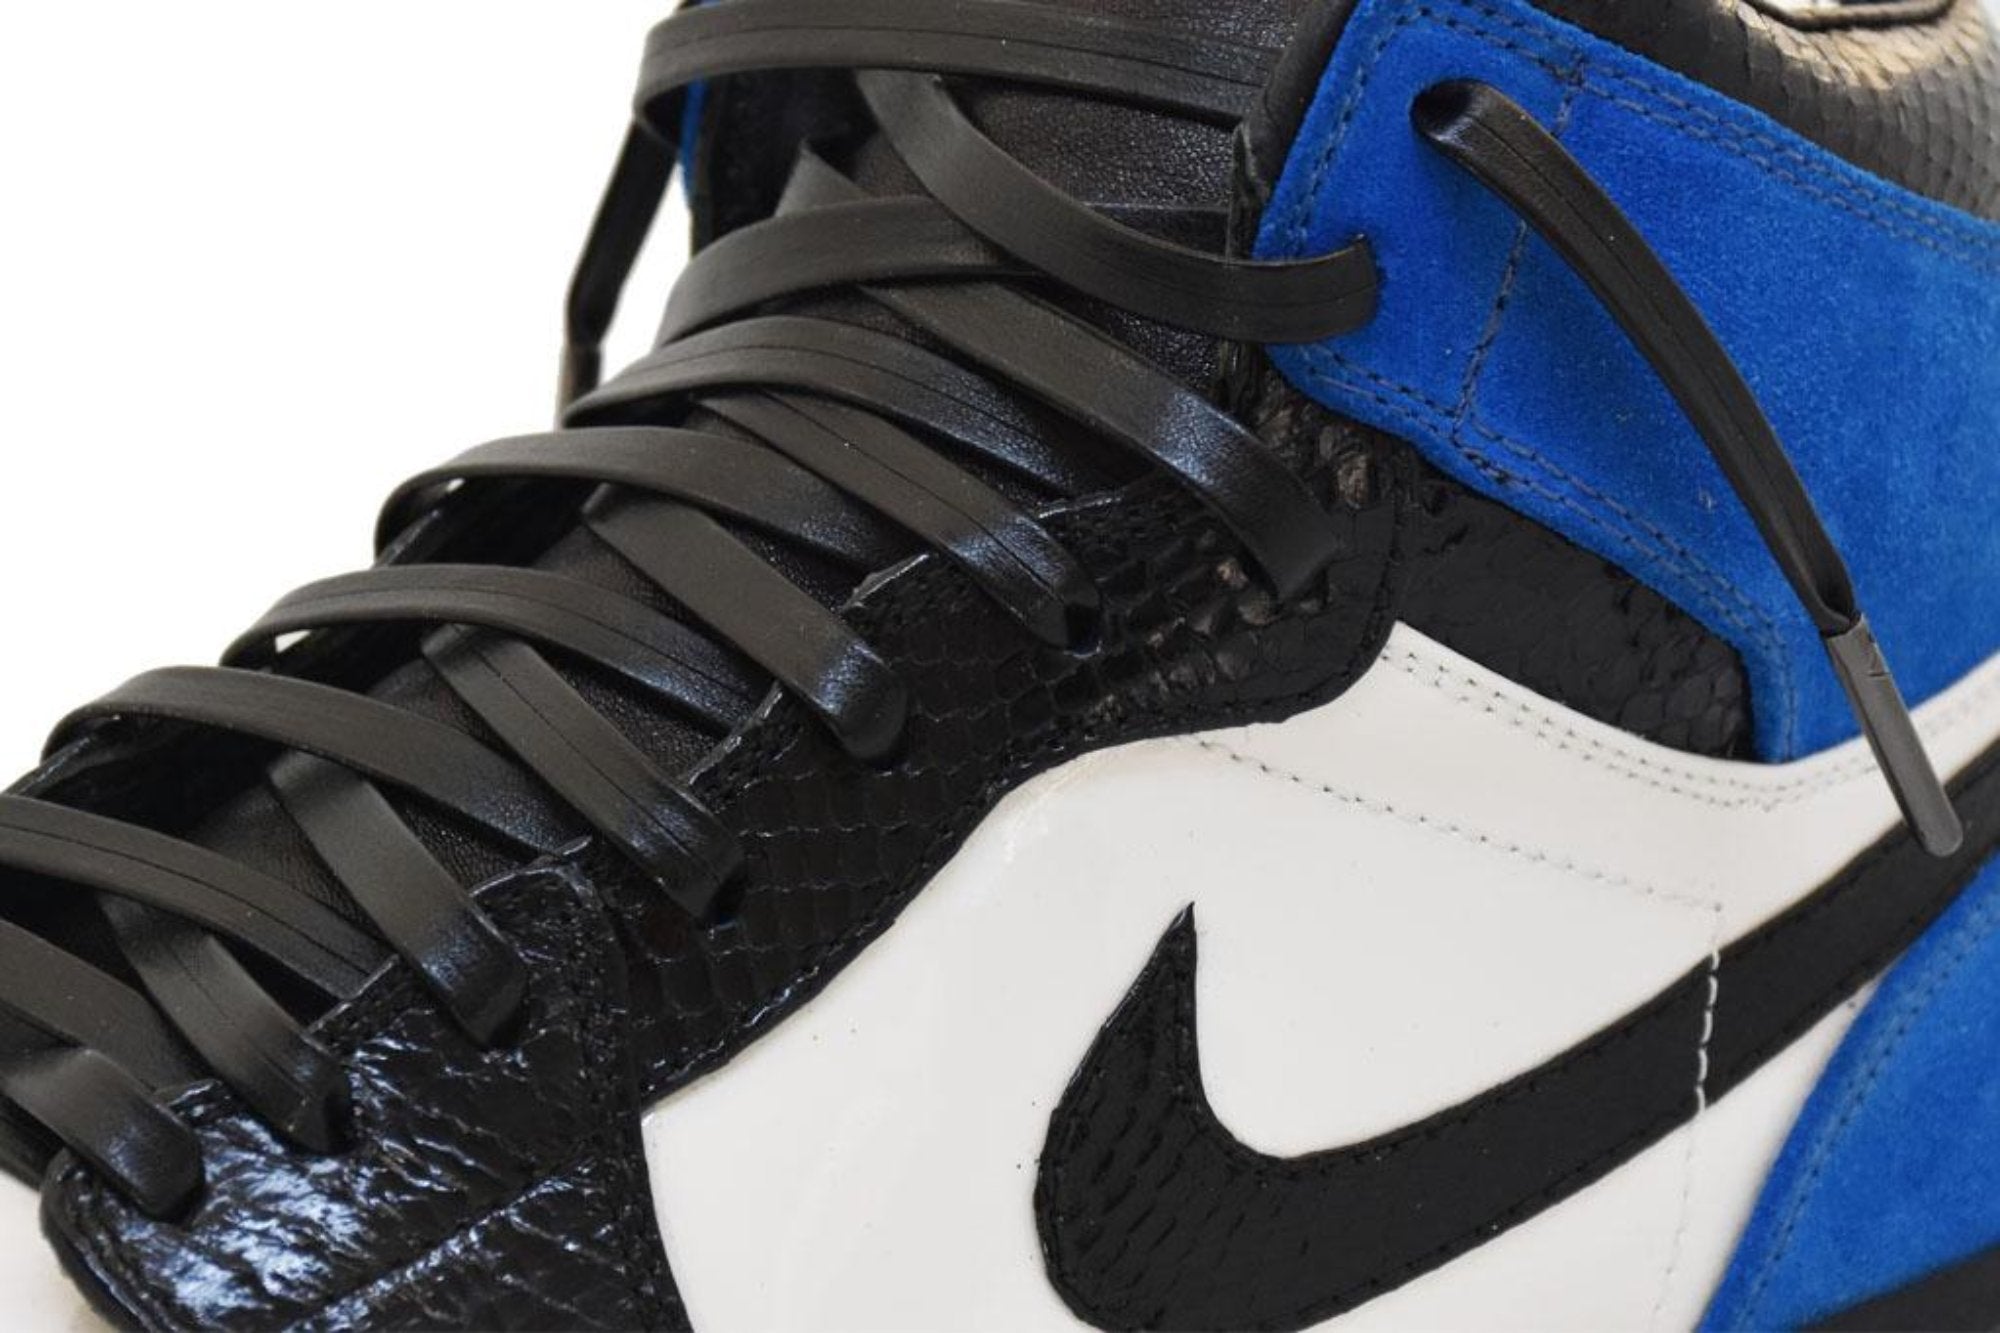 Jordan 1 w blue suede, white patent leather & black snake